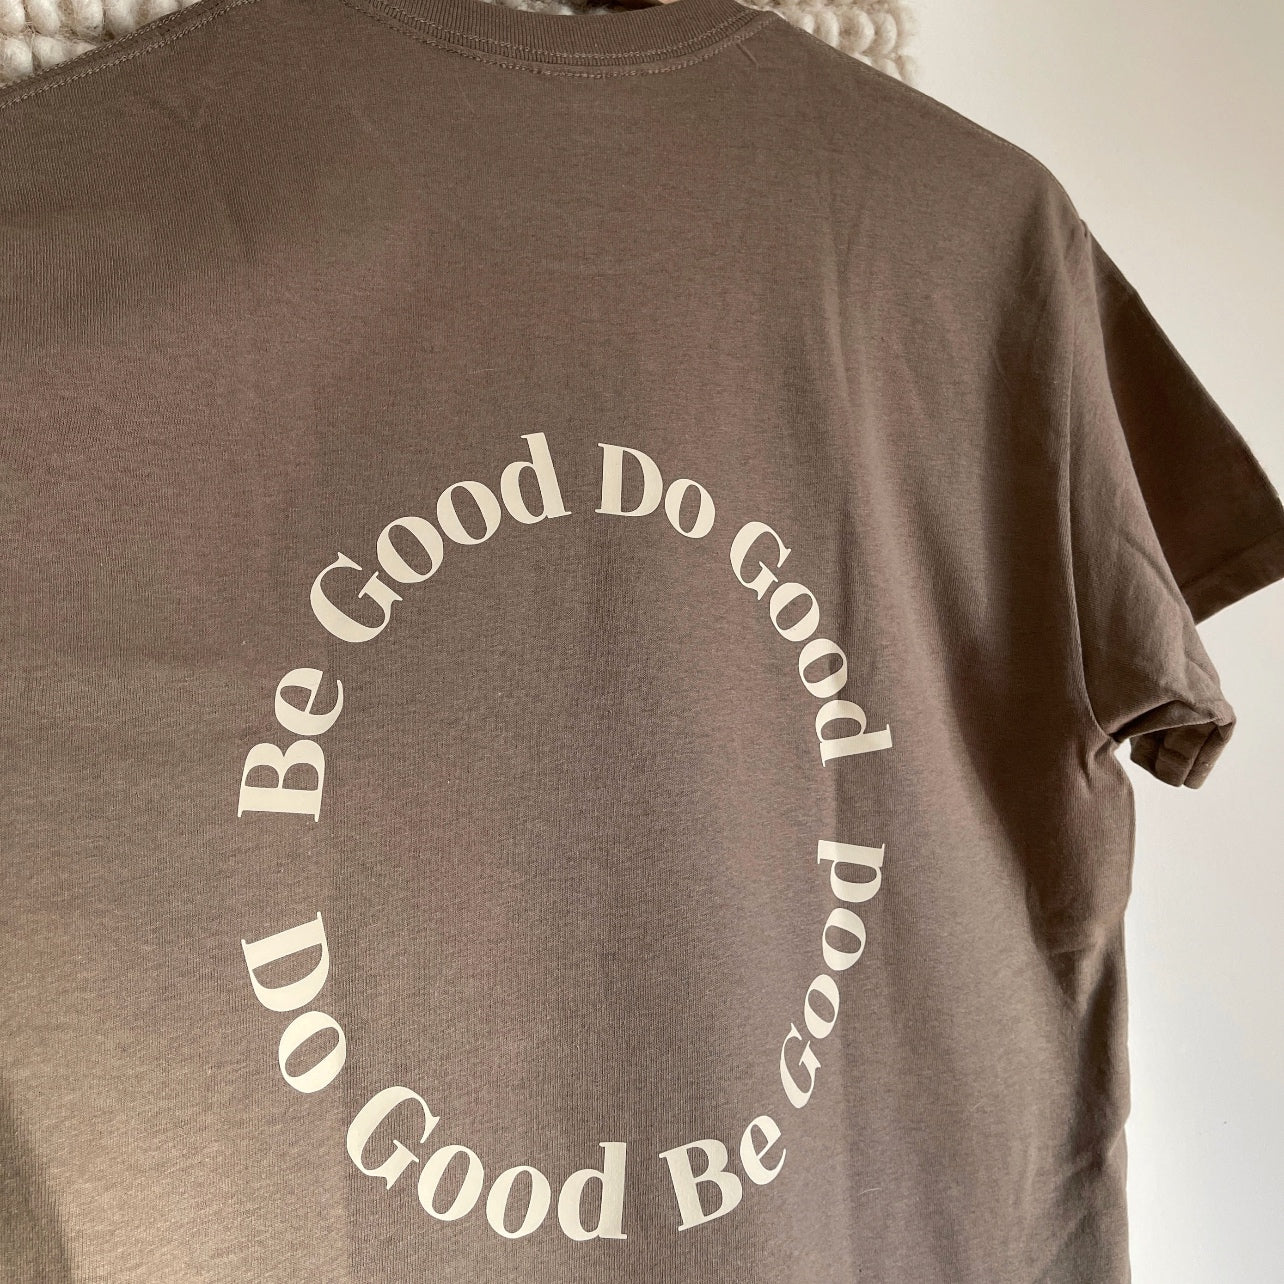 Be Good Do Good Tee